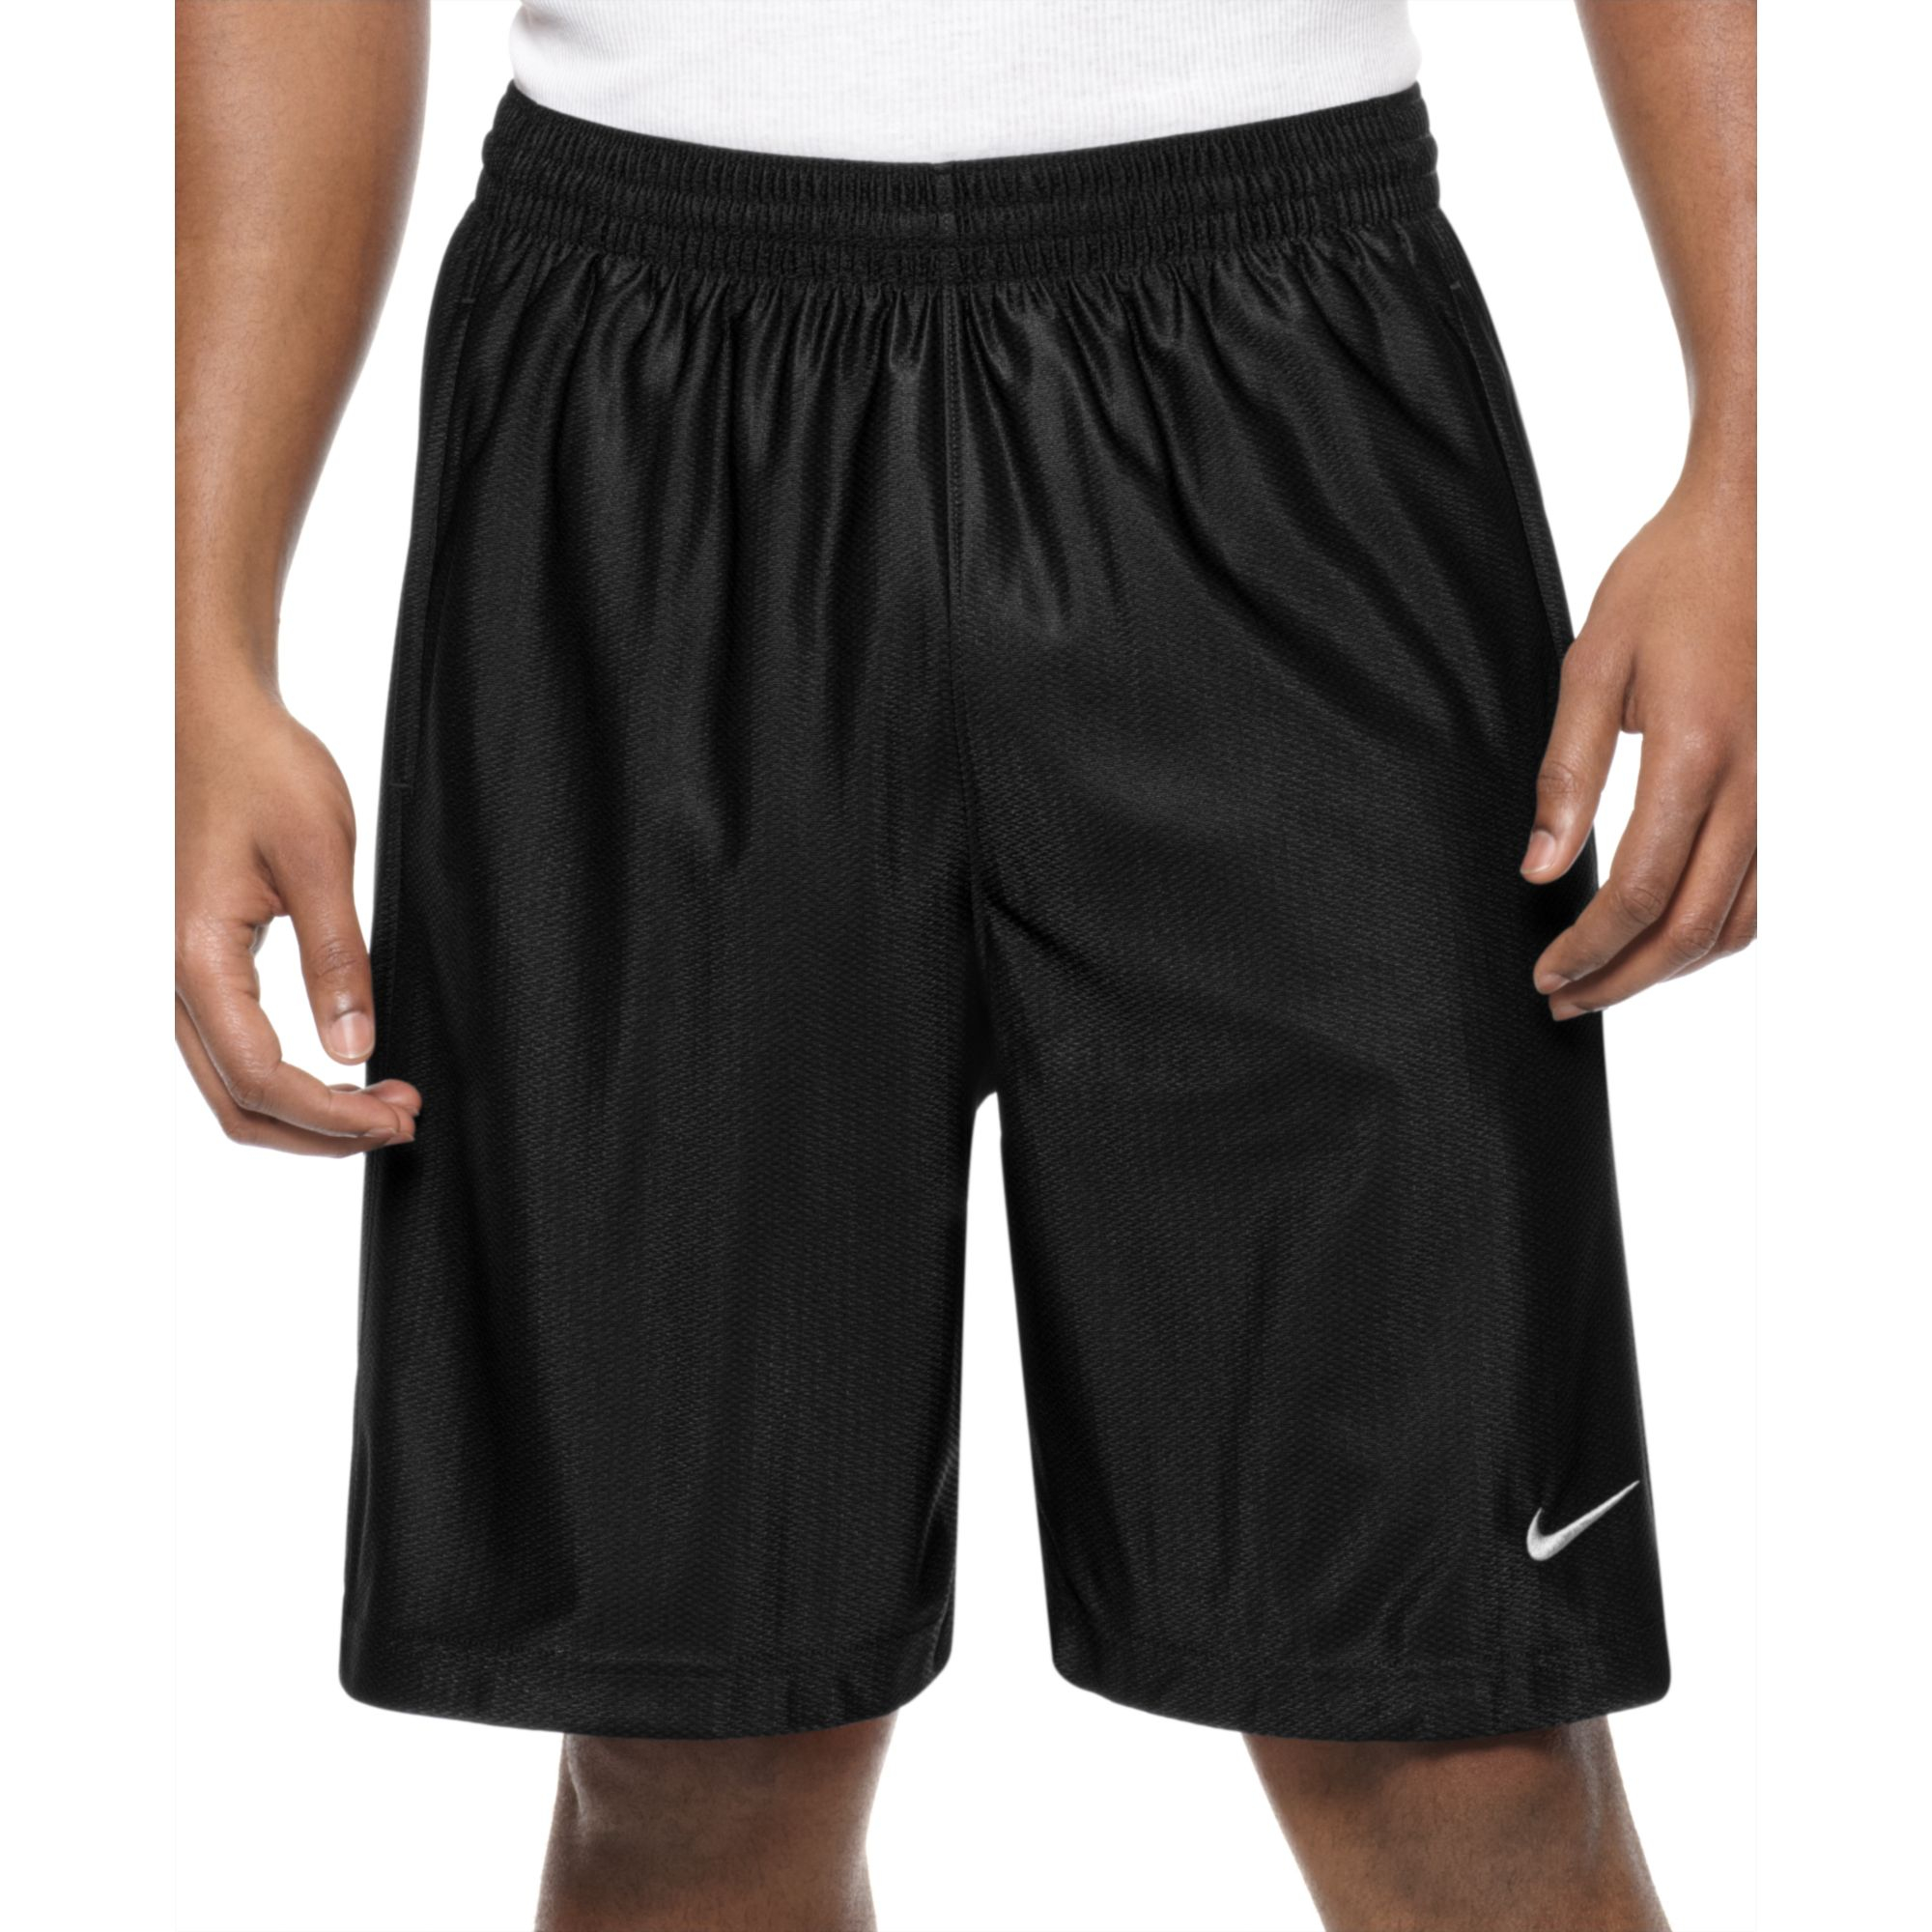 Nike Zone Mesh Basketball Shorts in Black for Men - Lyst